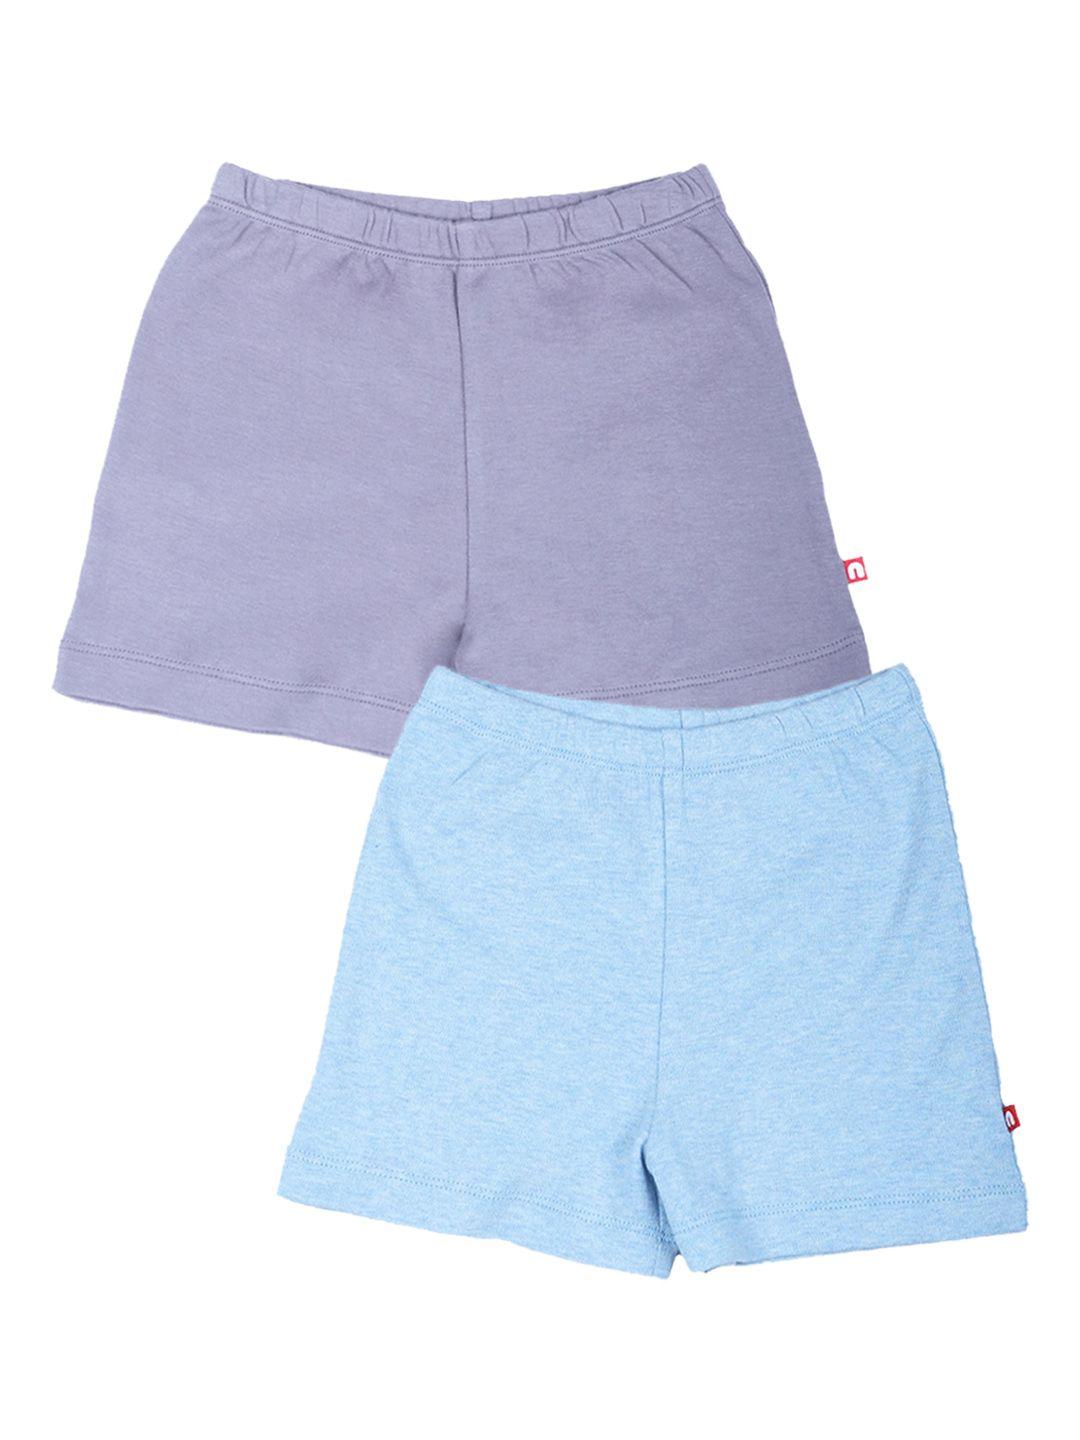 nino-bambino-boys-pack-of-2-organic-cotton-shorts